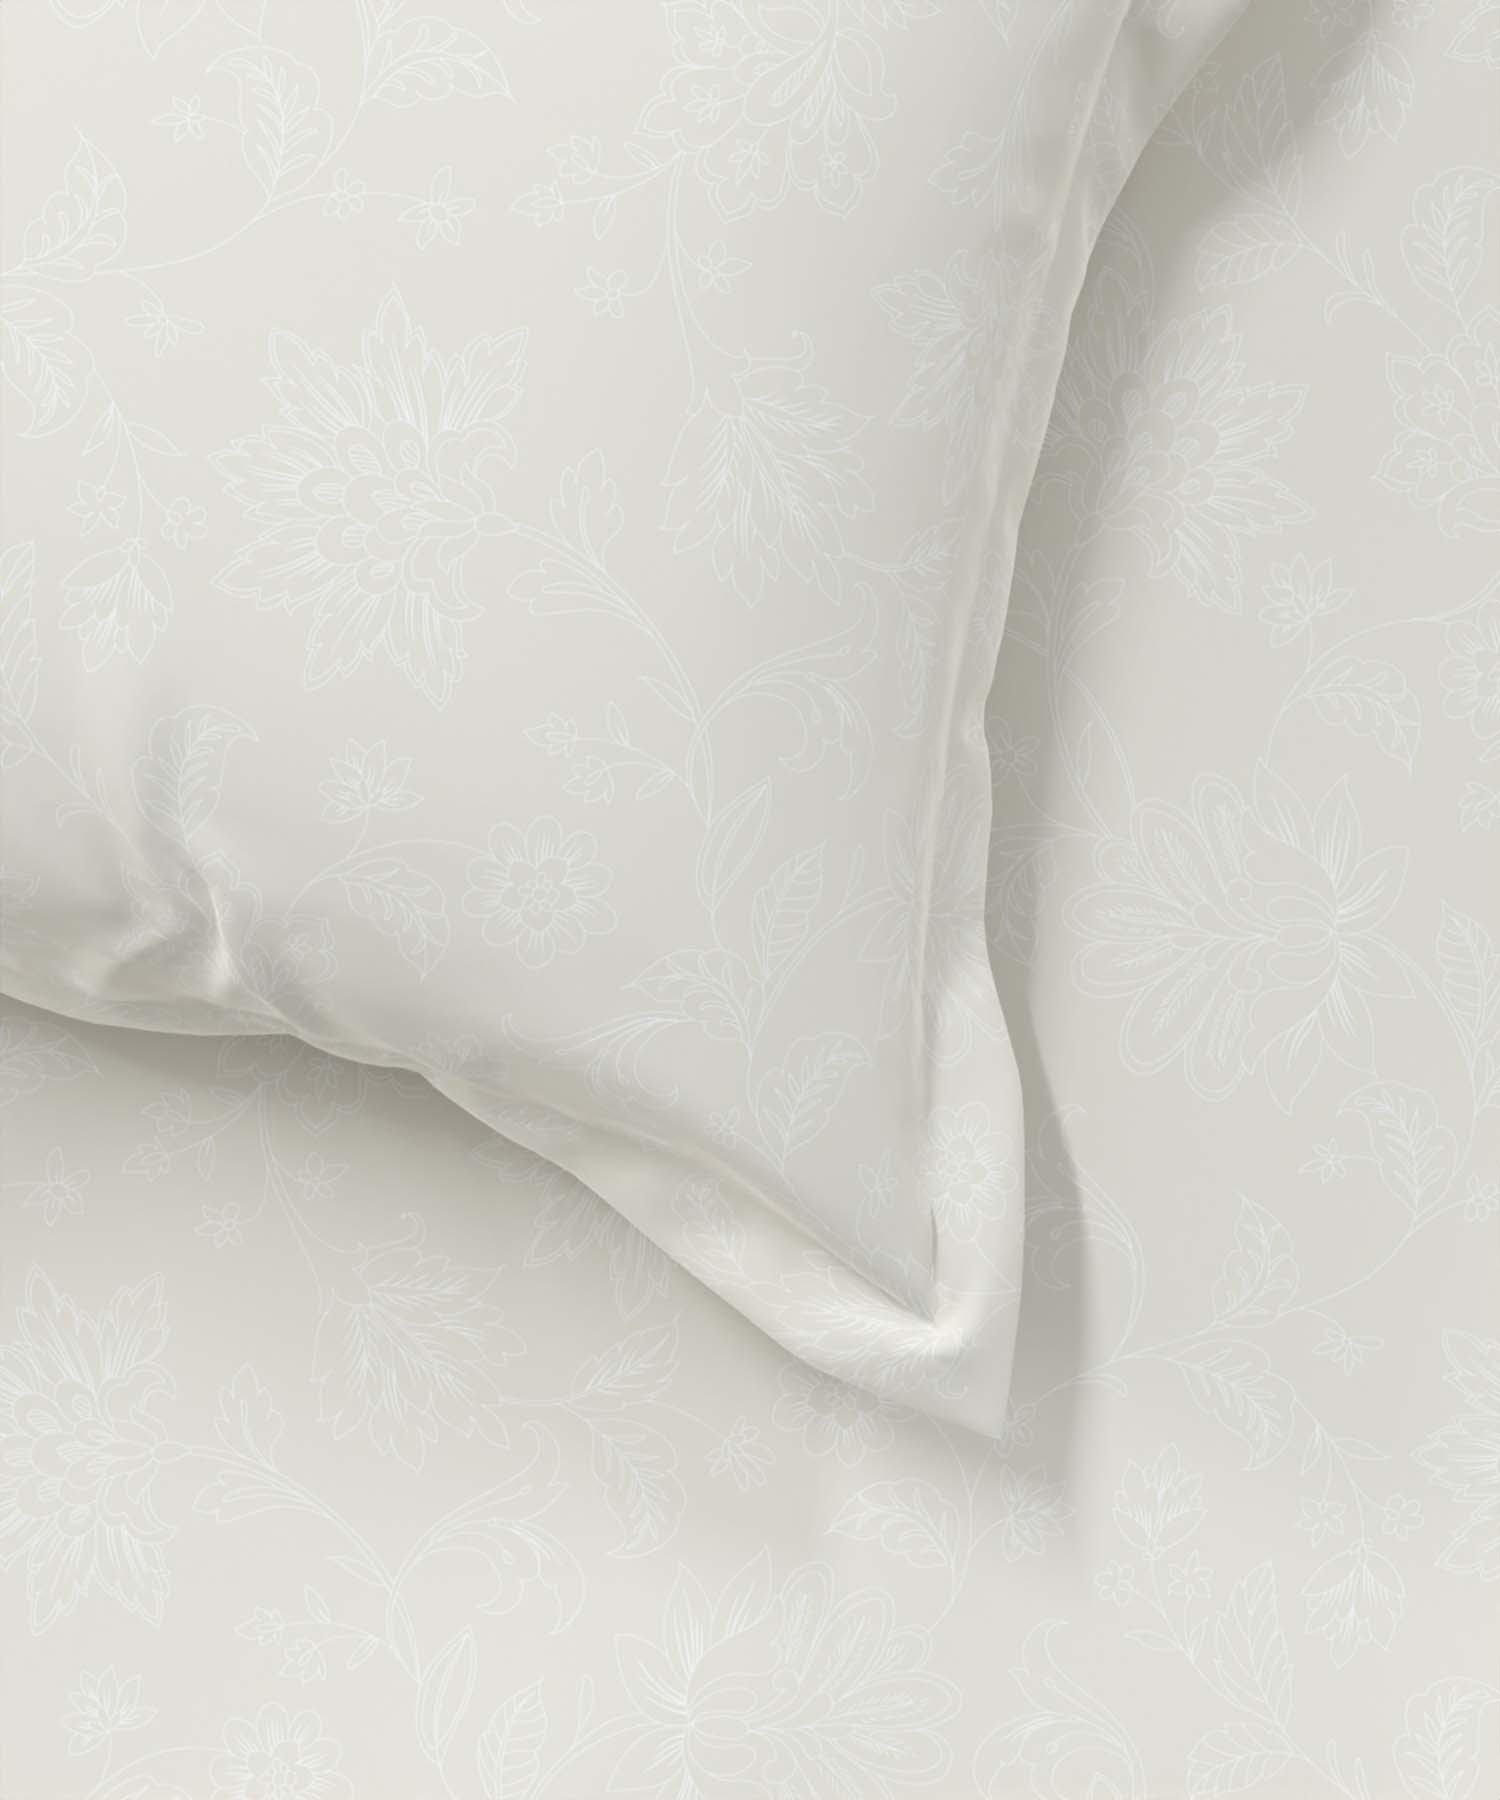 Pastel Poetry King Bedsheet Set, 100% Cotton, 144 TC,Vanilla